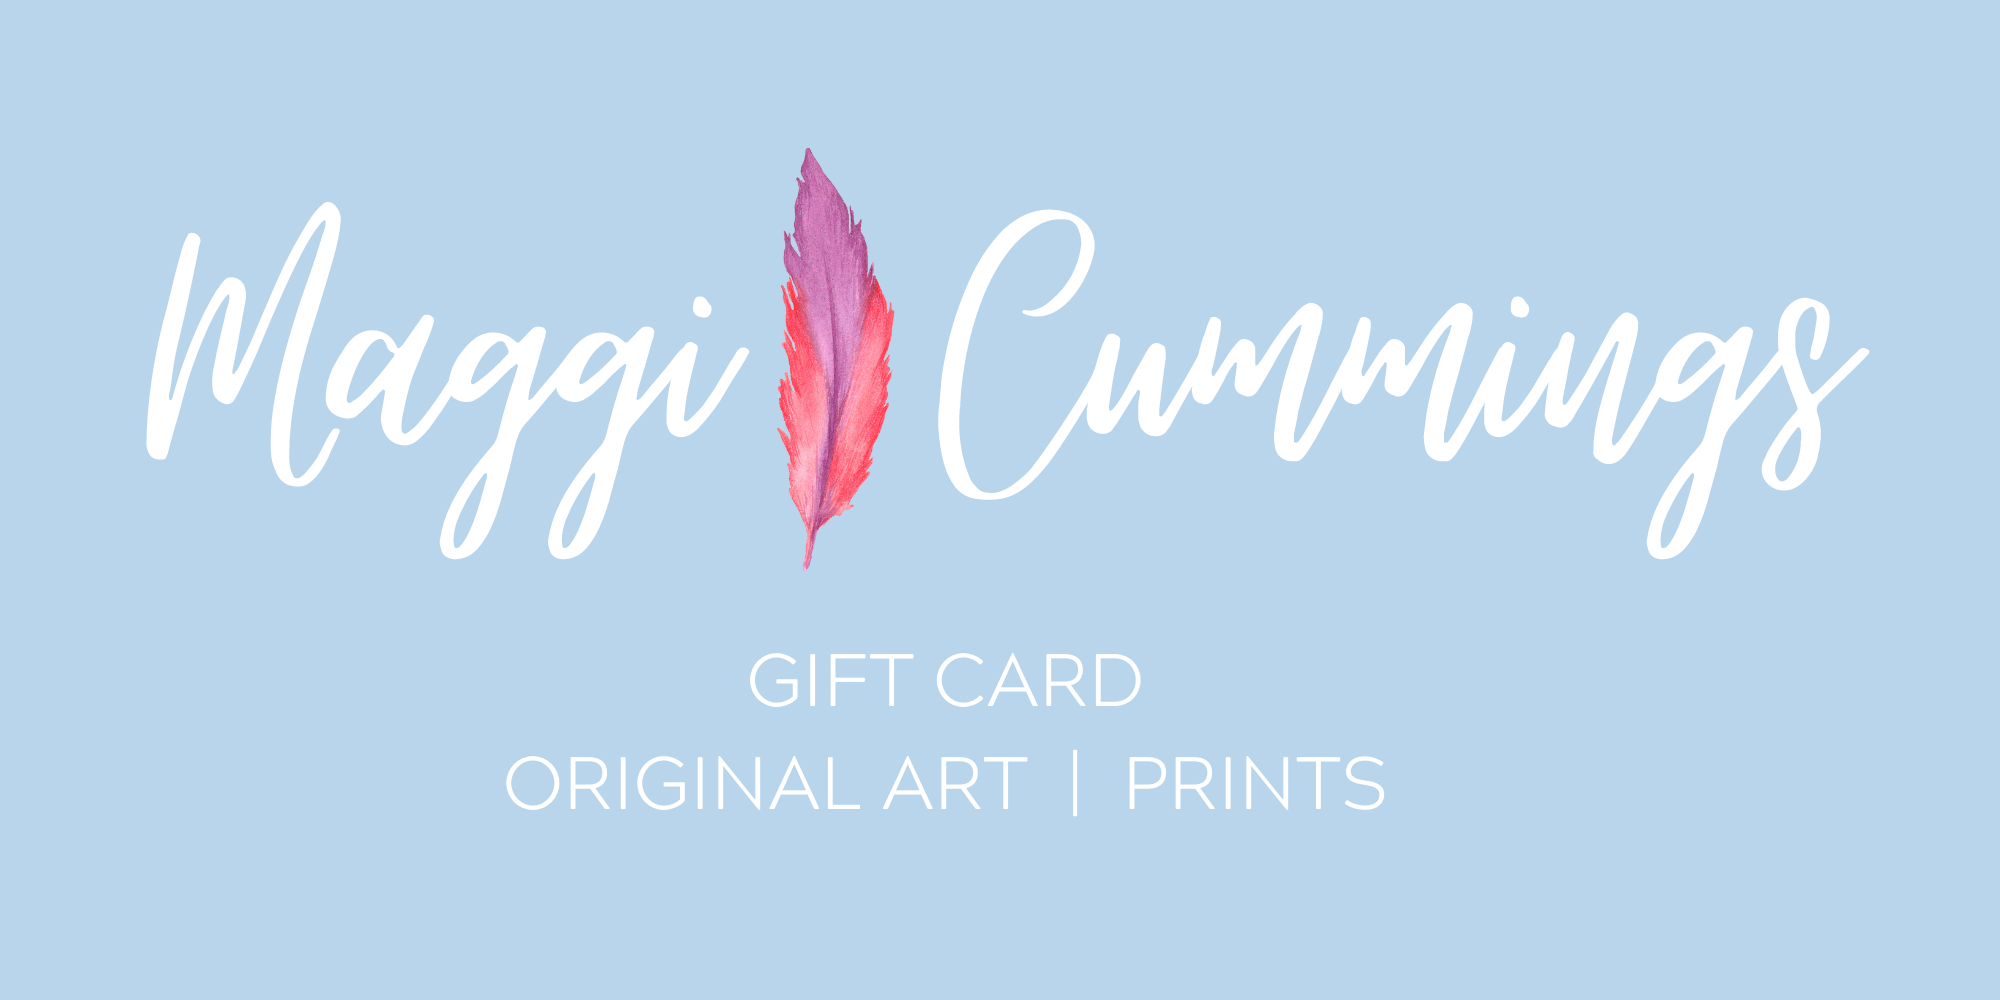 Maggi Cummings Art Gift Card